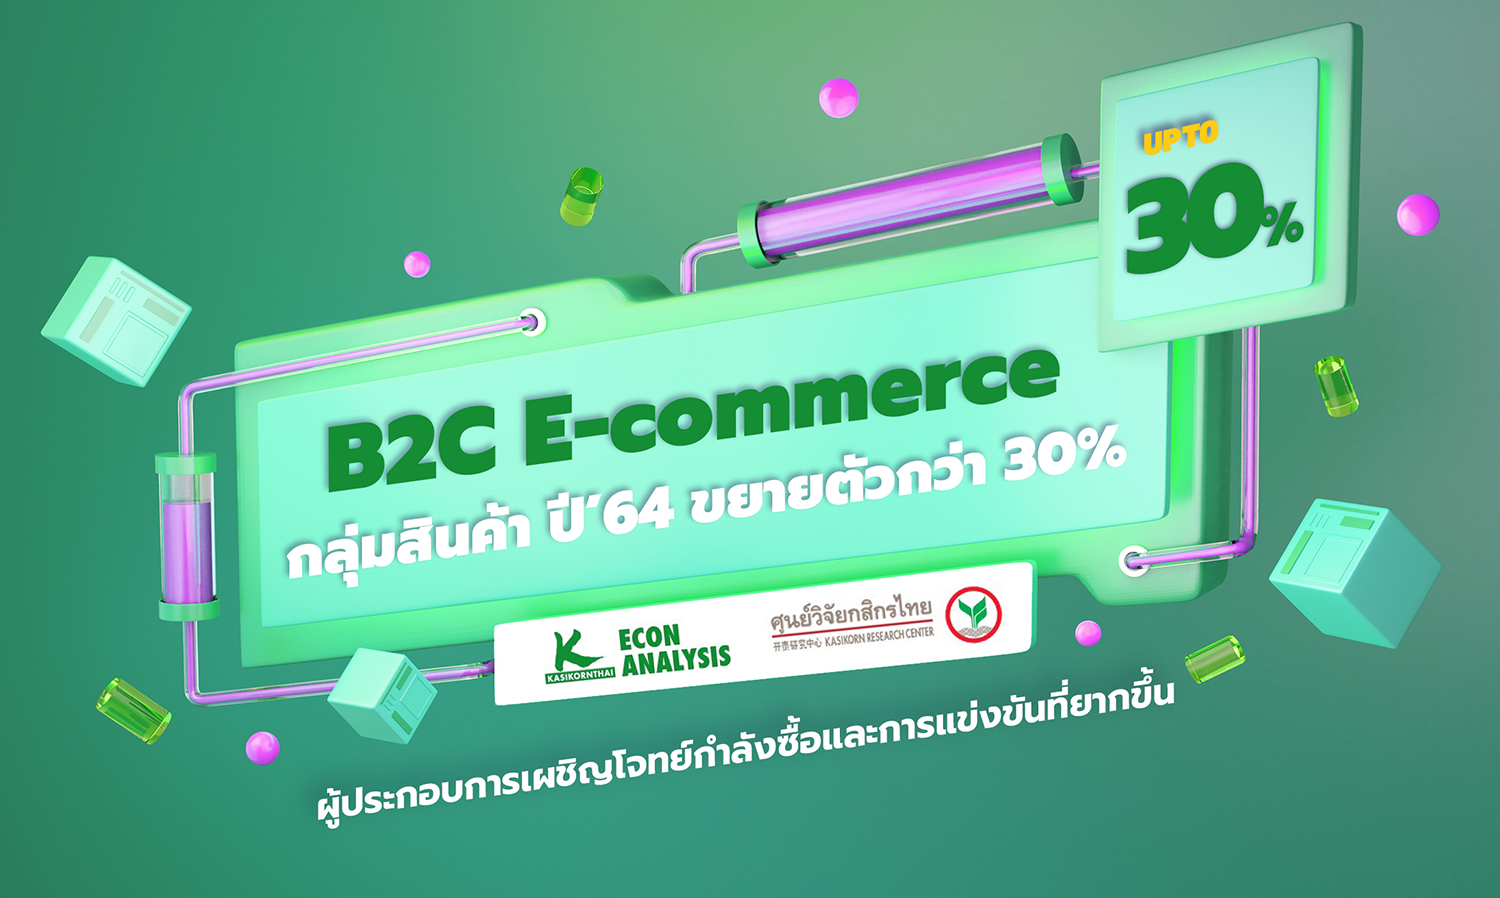 B2C E-commerce กลุ่มสินค้า ปี’64 ขยายตัวกว่า 30% ผู้ประกอบการเผชิญโจทย์กำลังซื้อและการแข่งขันที่ยากขึ้น (ศูนย์วิจัยกสิกรไทย)